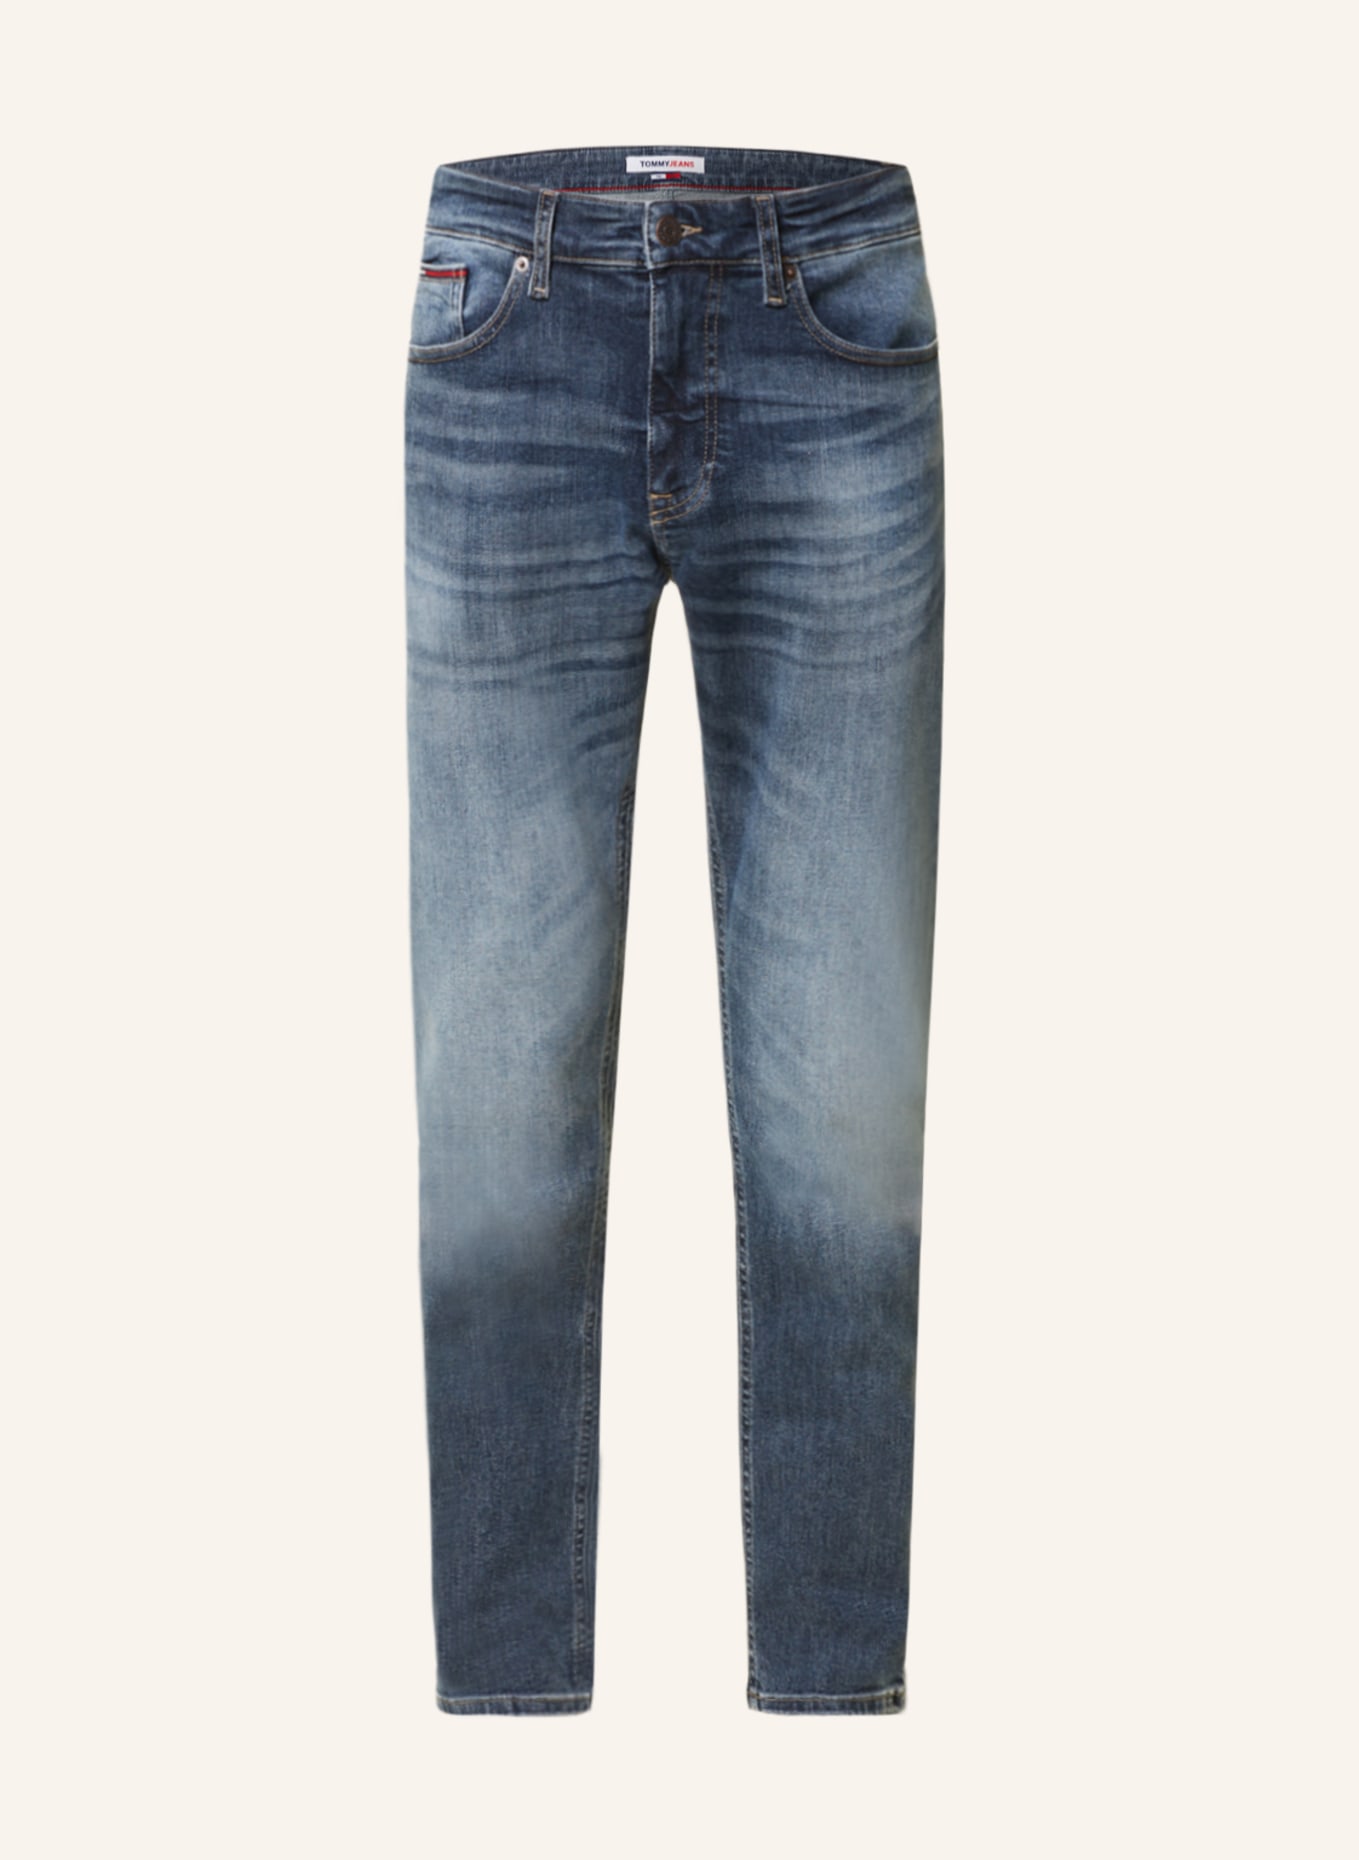 TOMMY JEANS Jeans AUSTIN Tapered Fit, Farbe: 1BK Denim Dark (Bild 1)